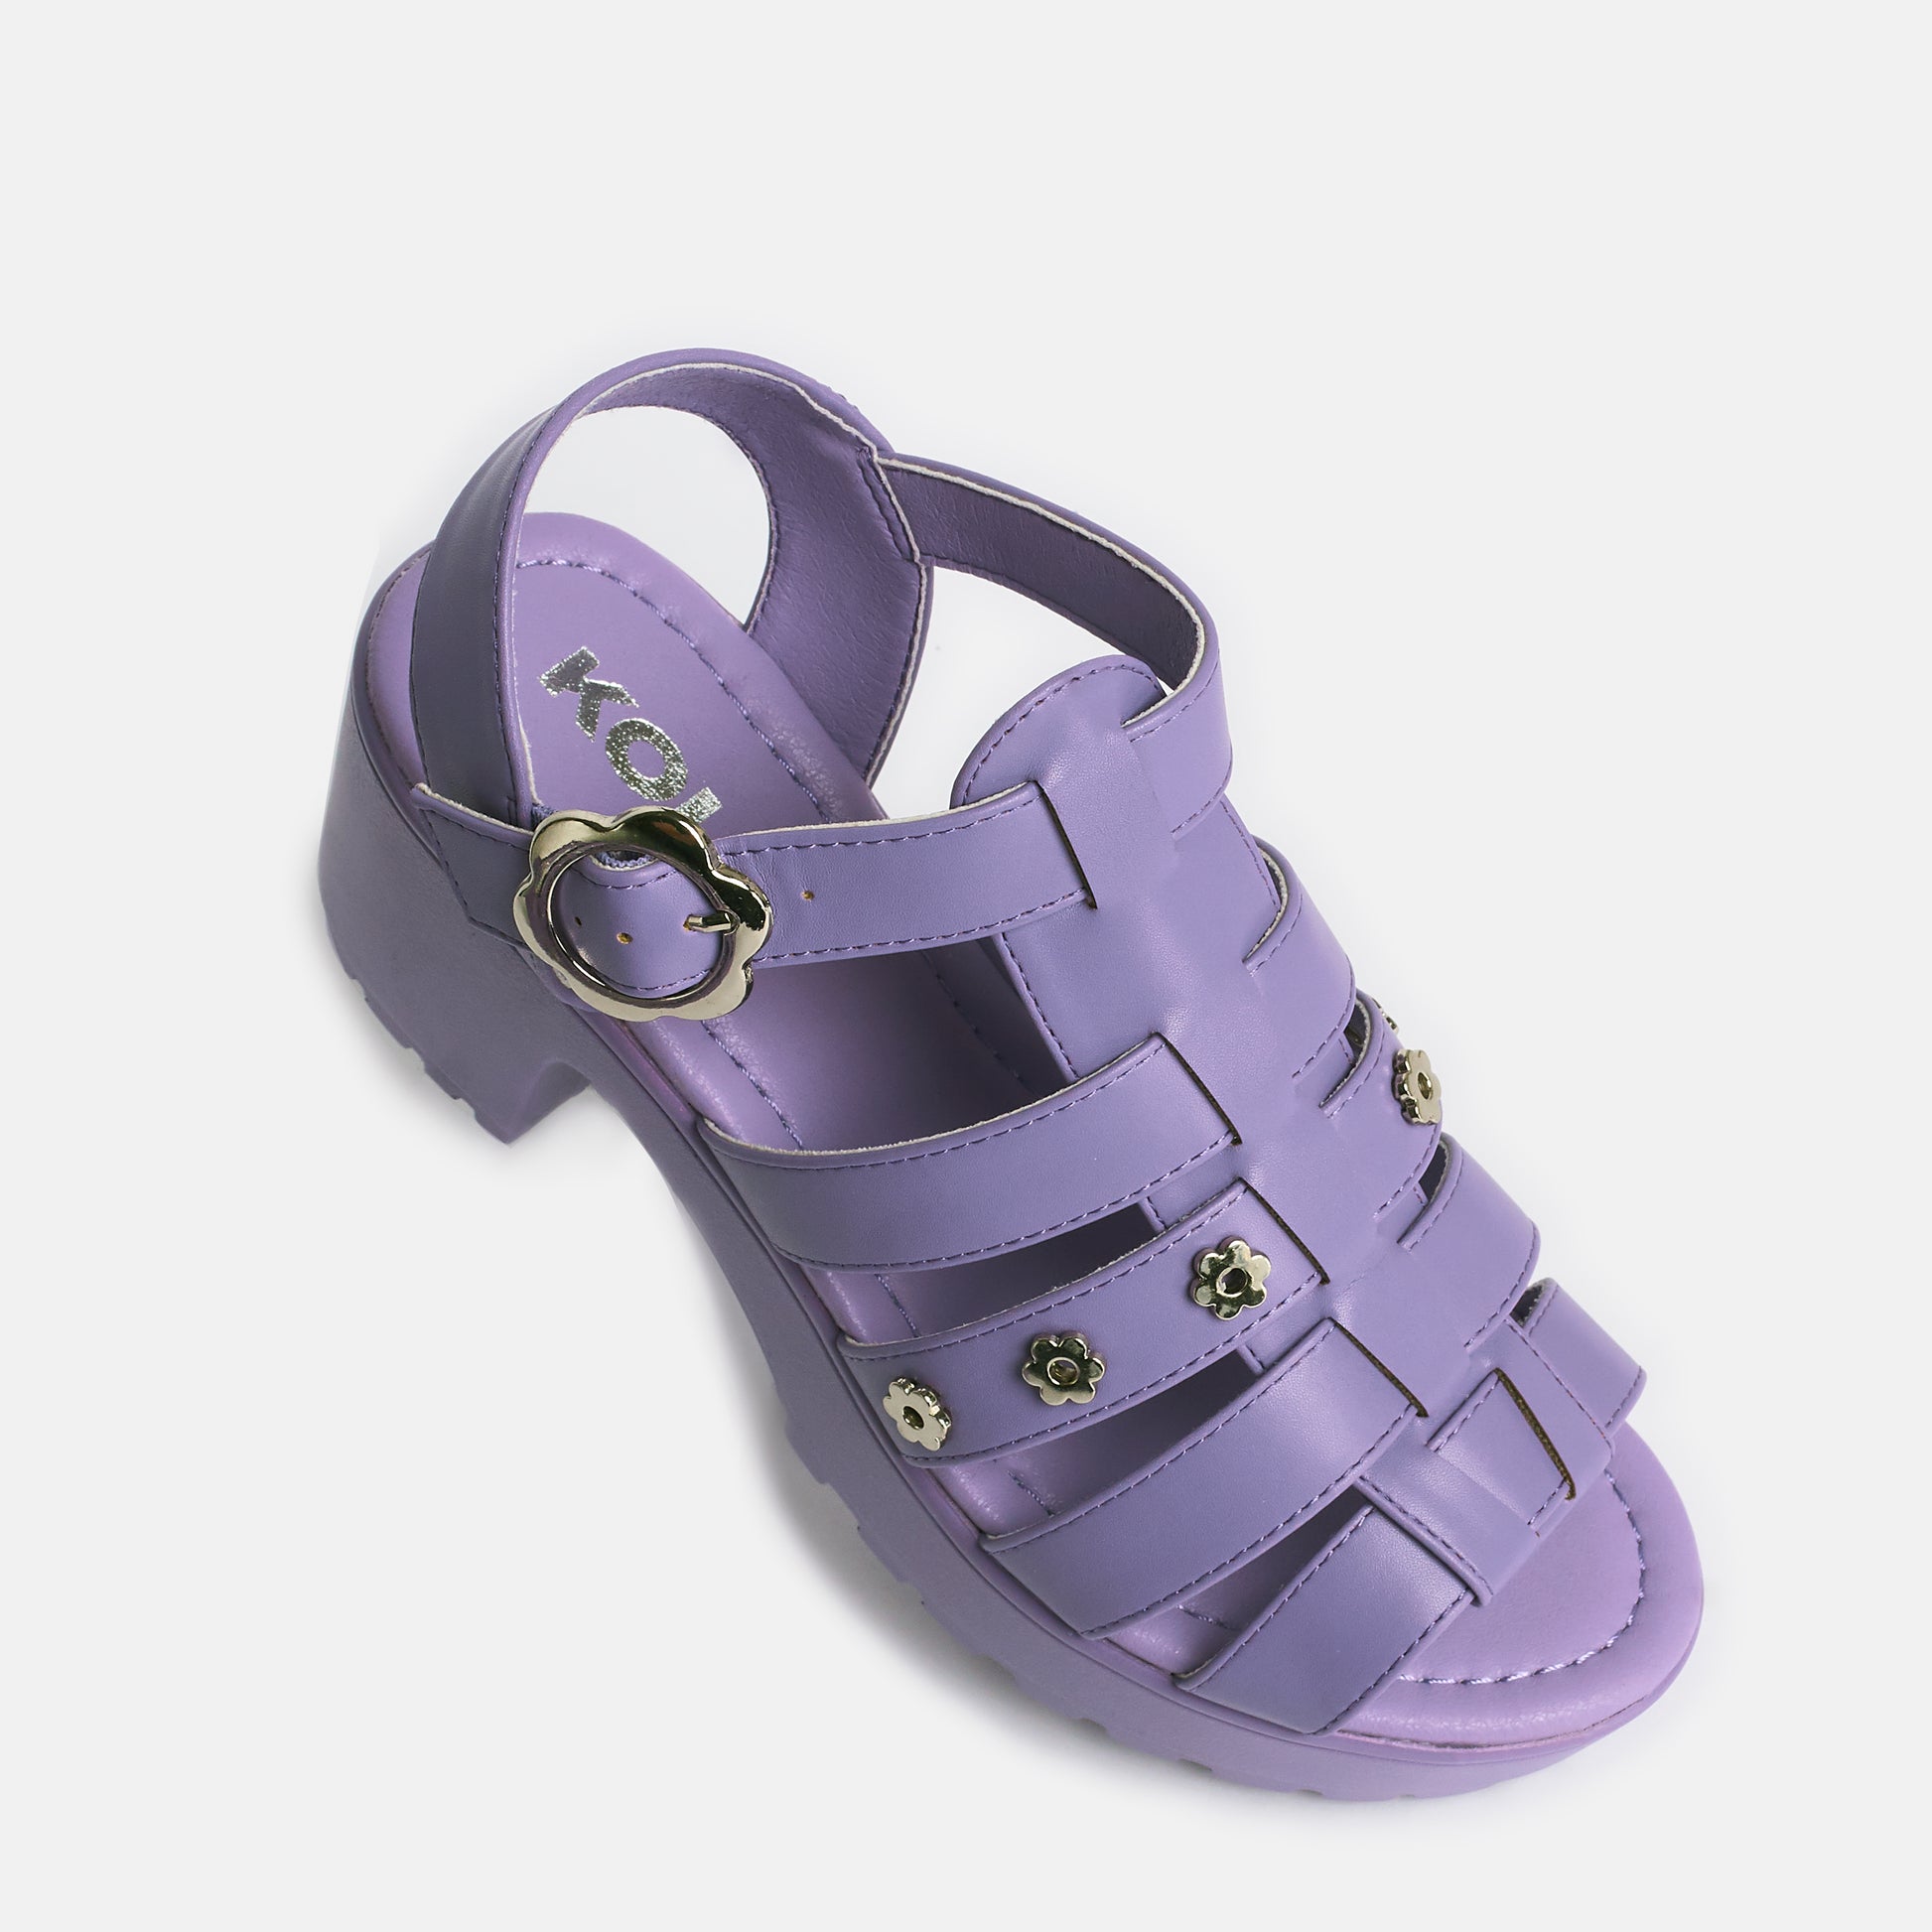 Desert Paradise Orchid Flower Sandals - Sandals - KOI Footwear - Purple - Top View